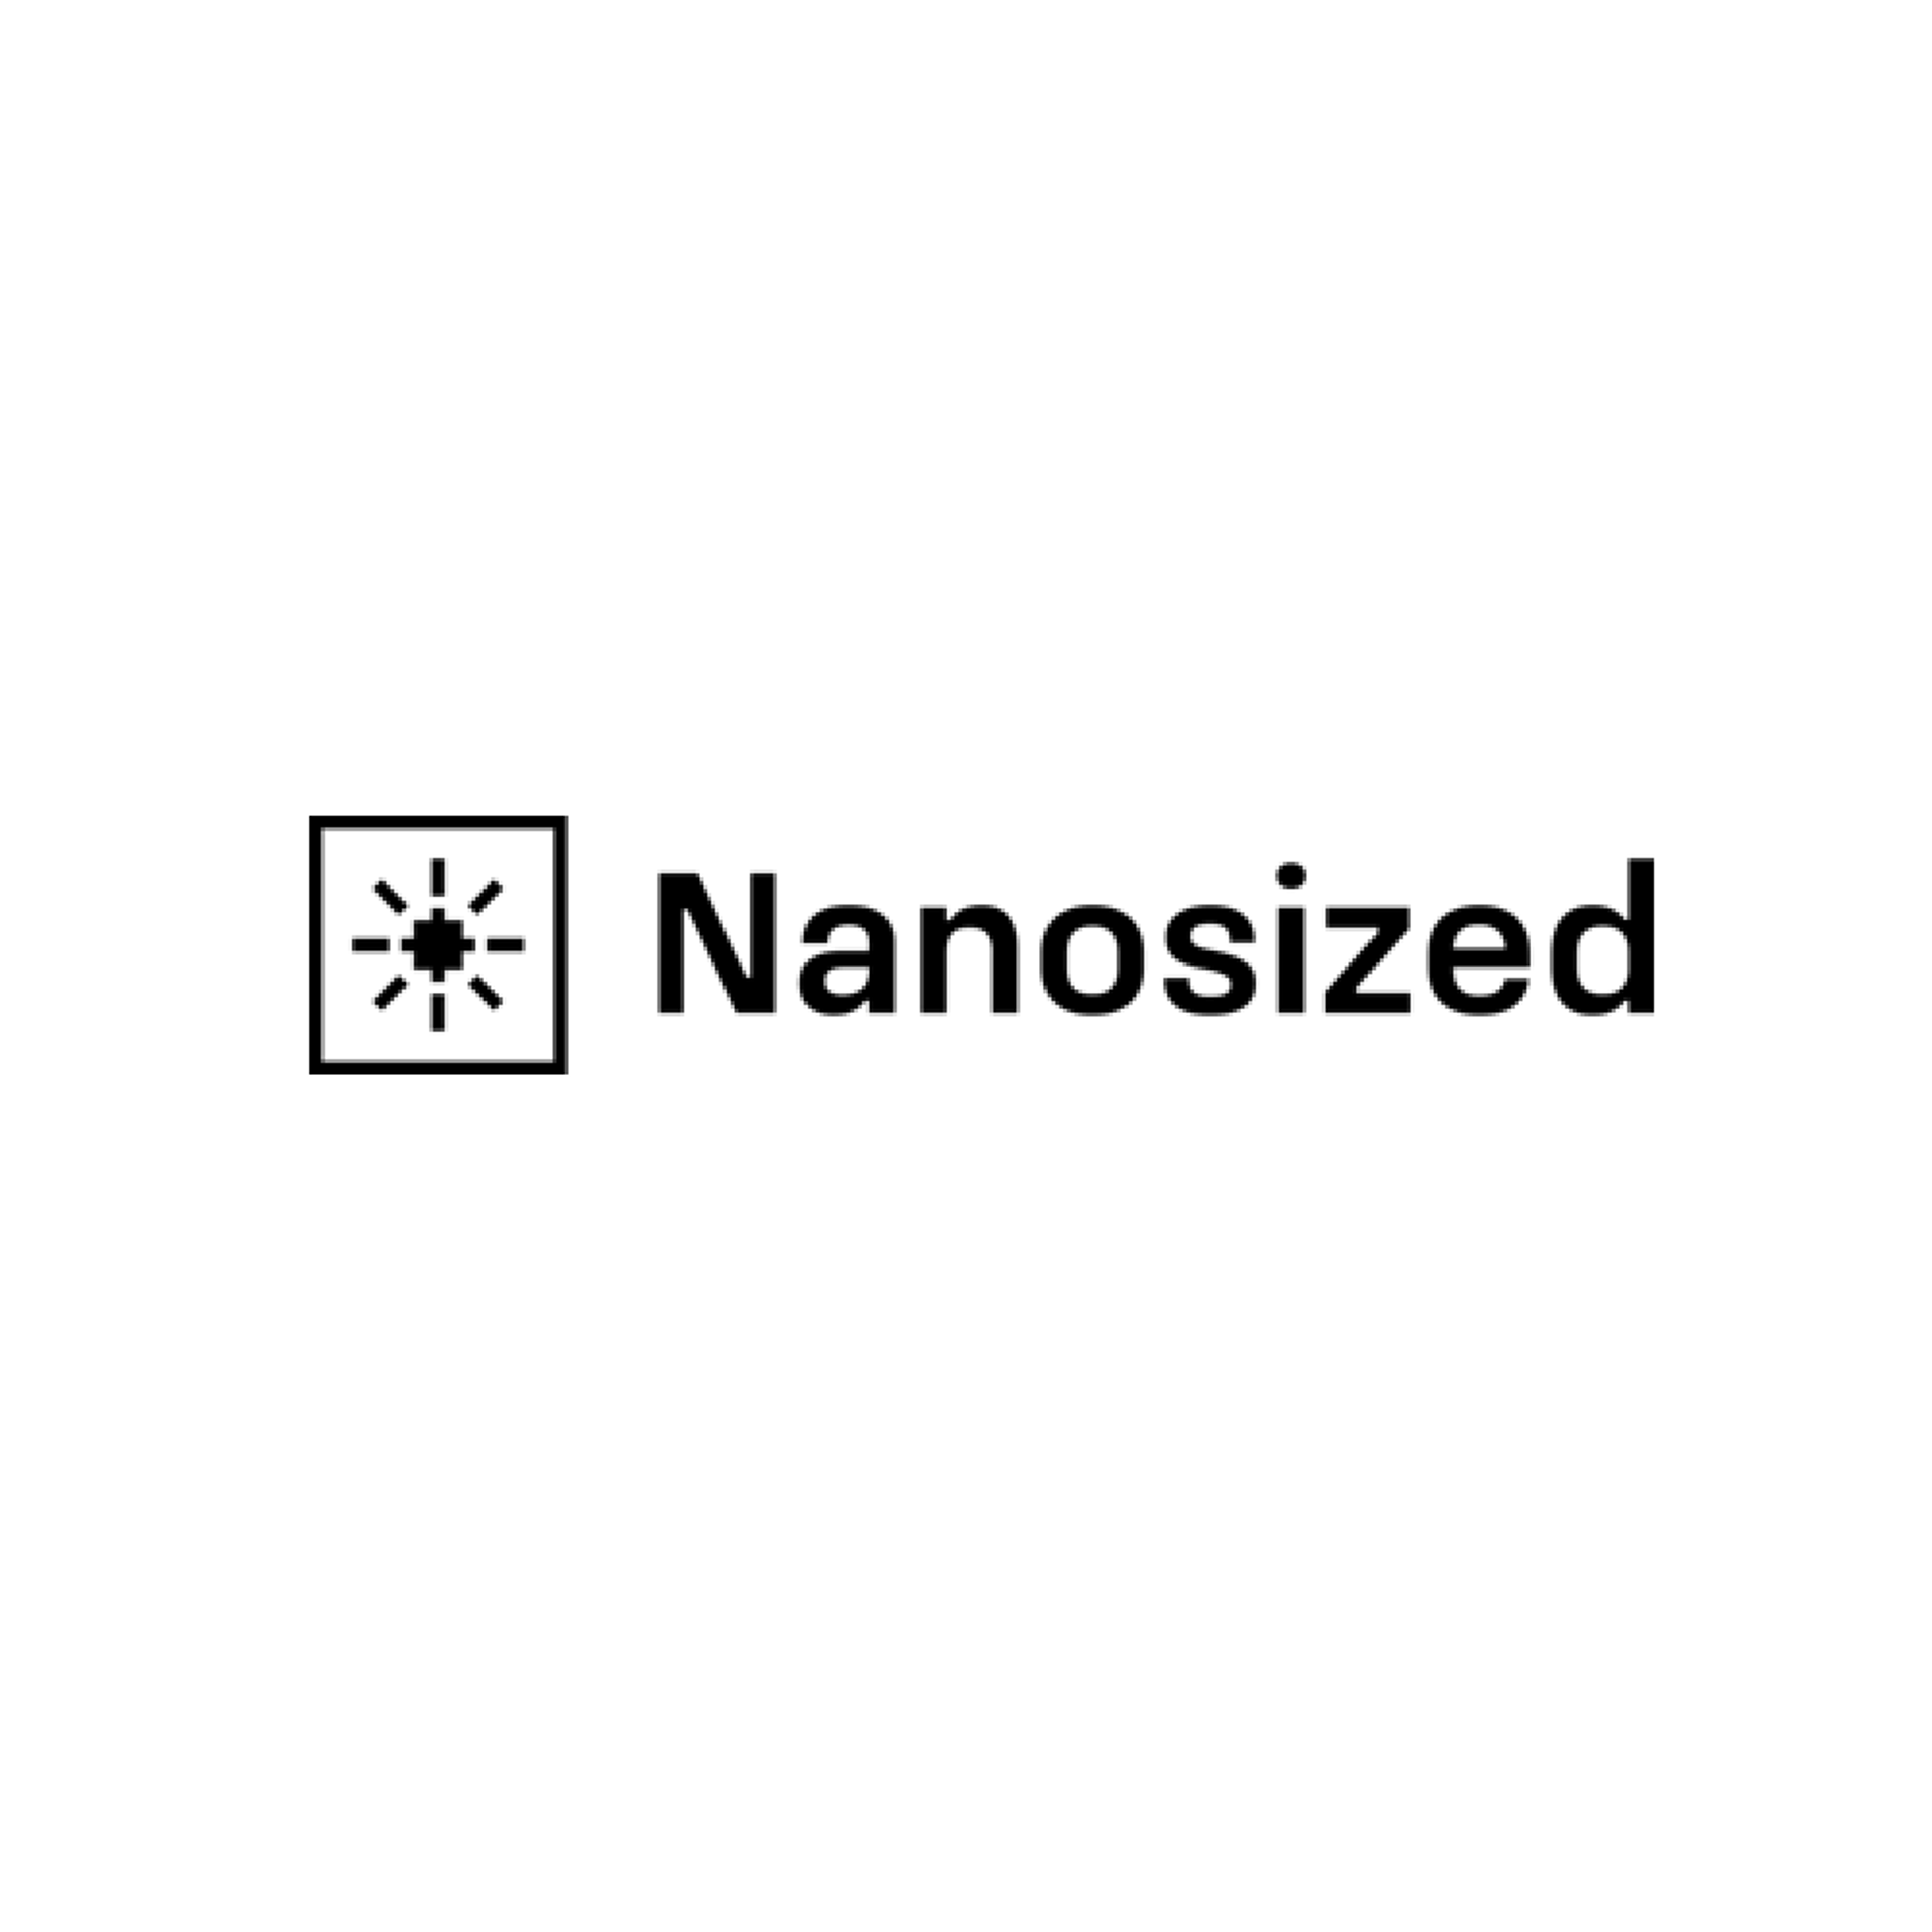 Nanosized